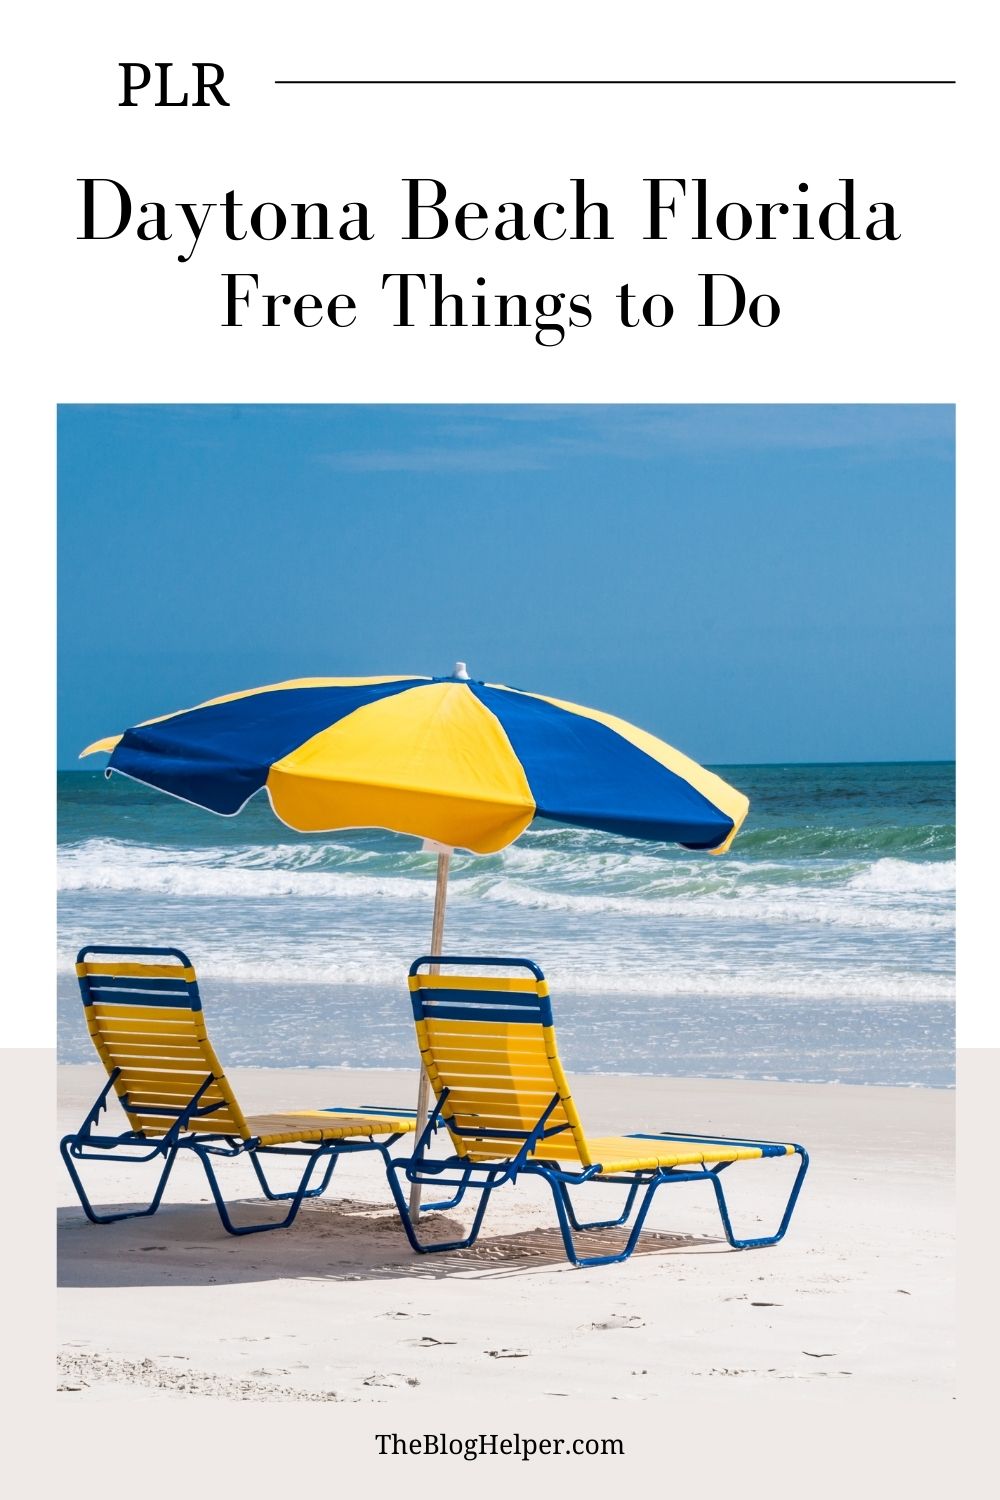 Daytona Beach Florida – Free Things to Do PLR #plr #daytonabeach #florida